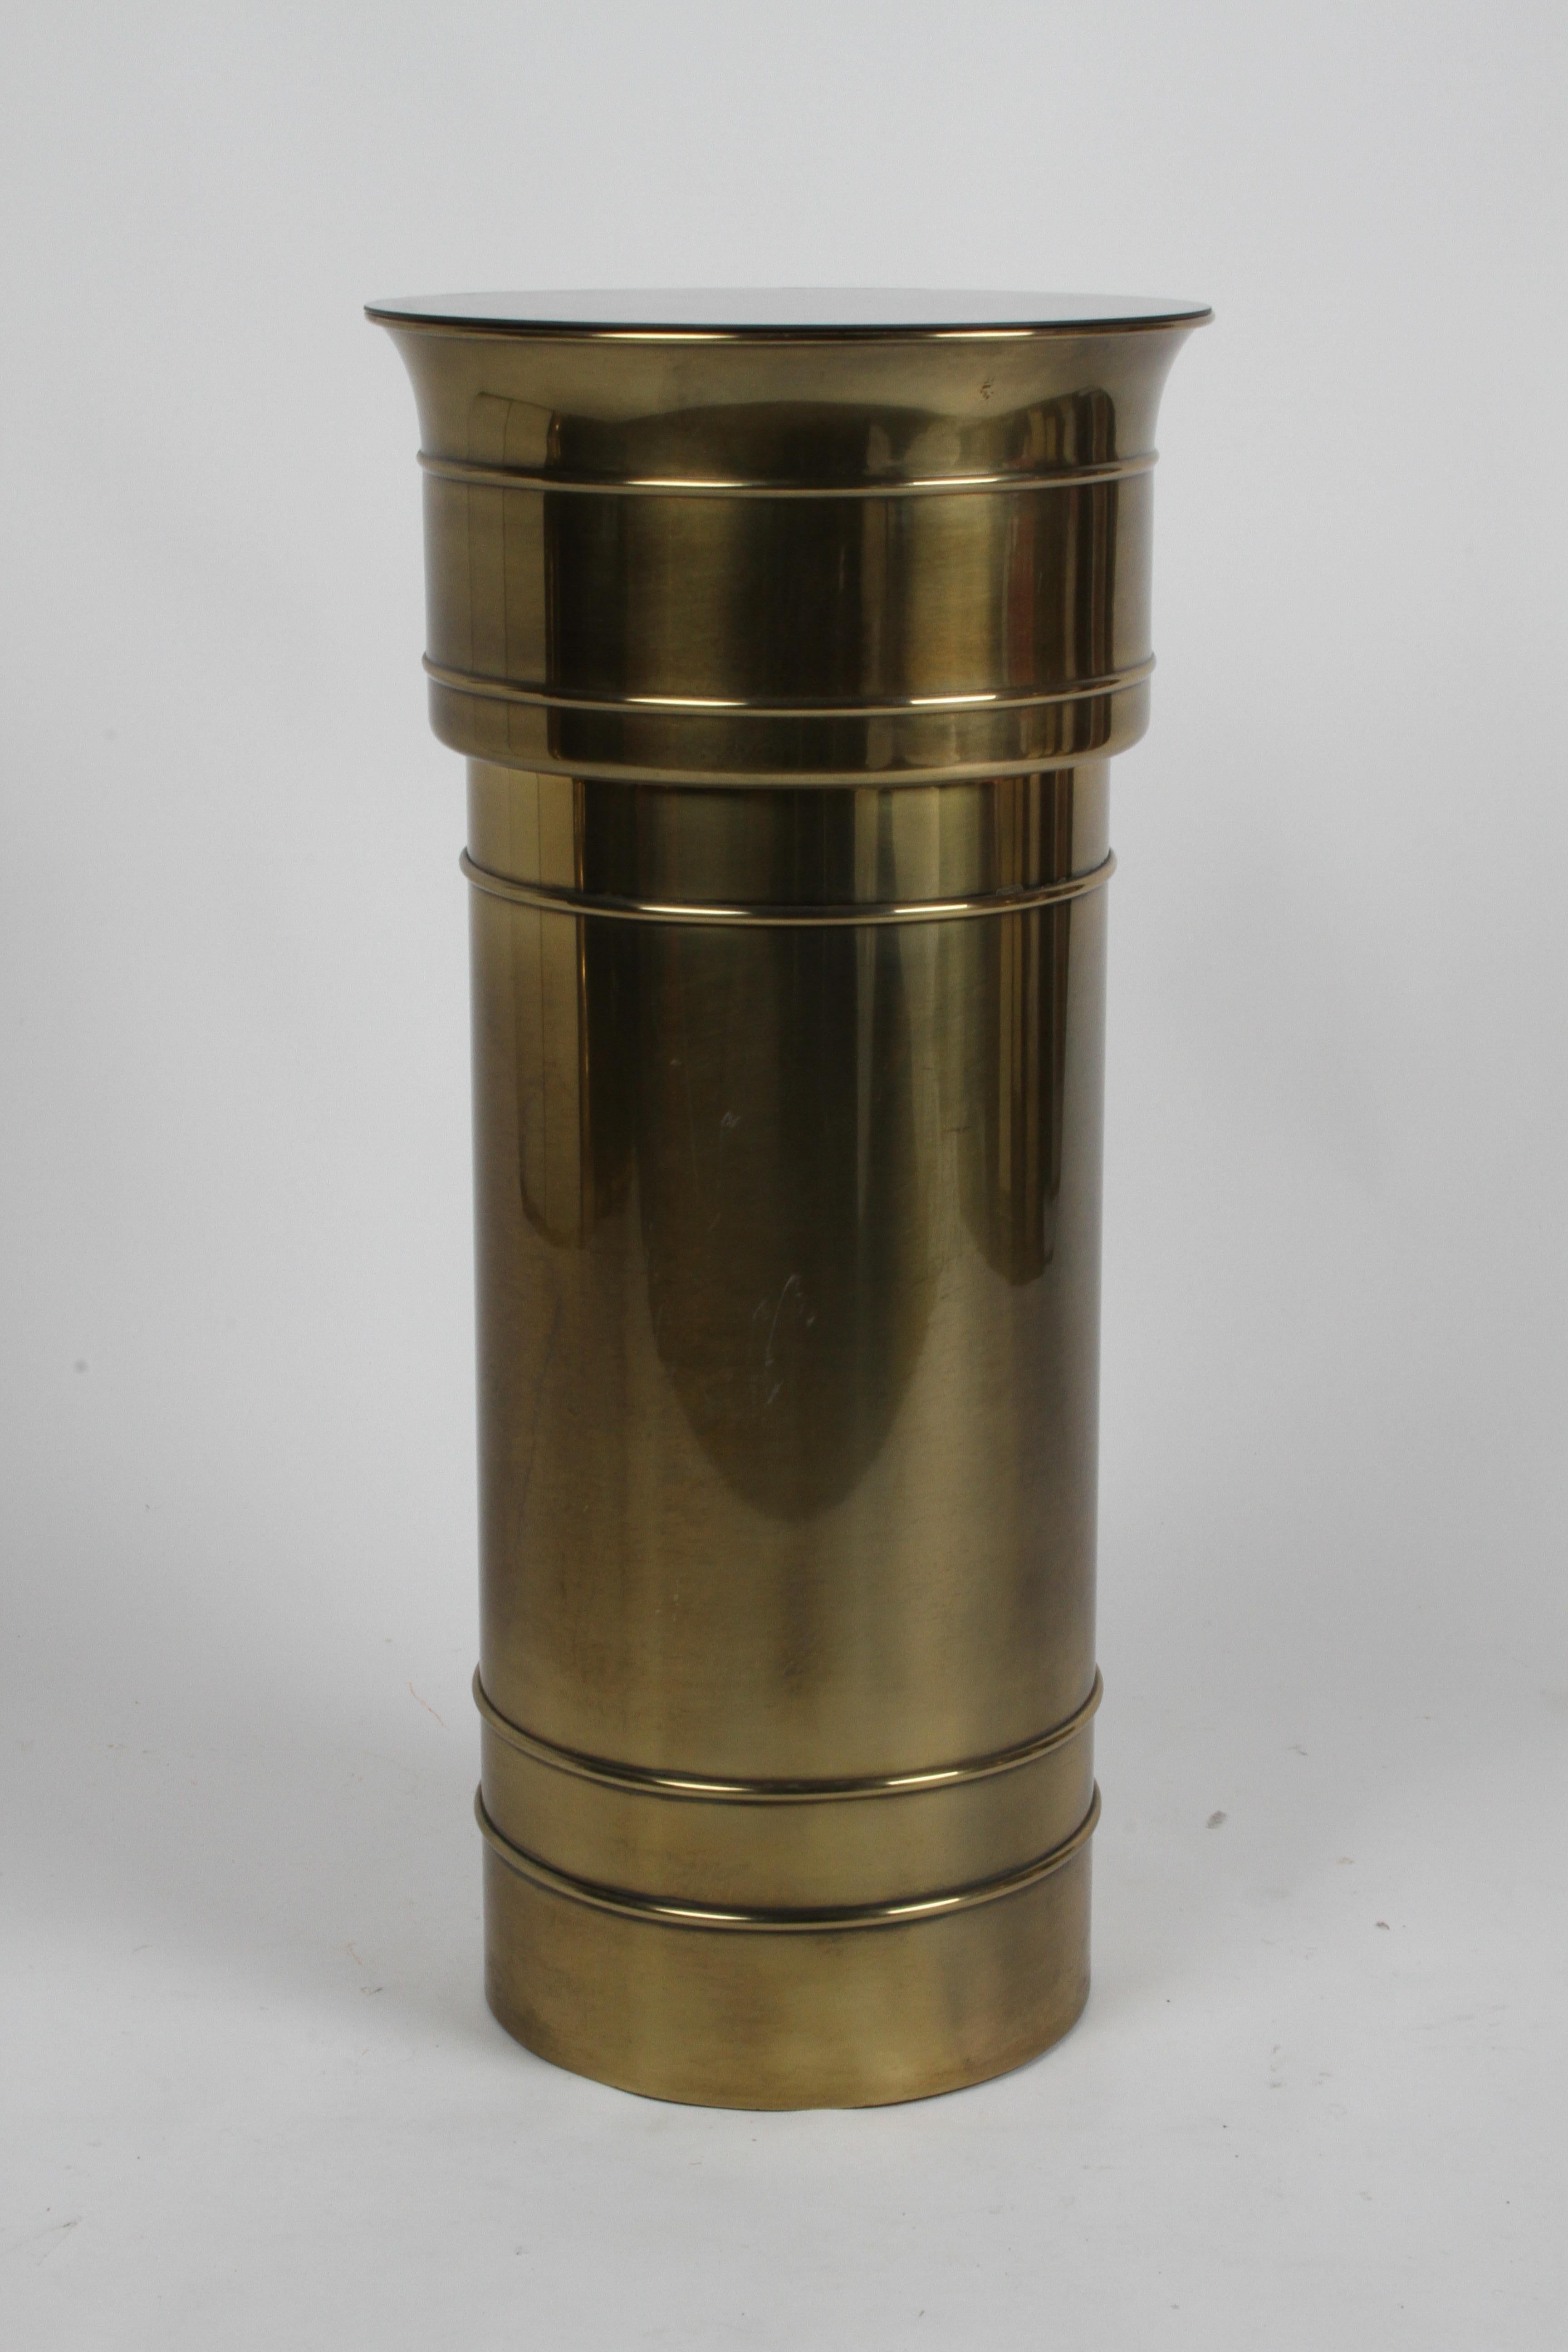 American Mastercraft Hollywood Regency Round Cylinder Brass Display Pedestal or Planter For Sale